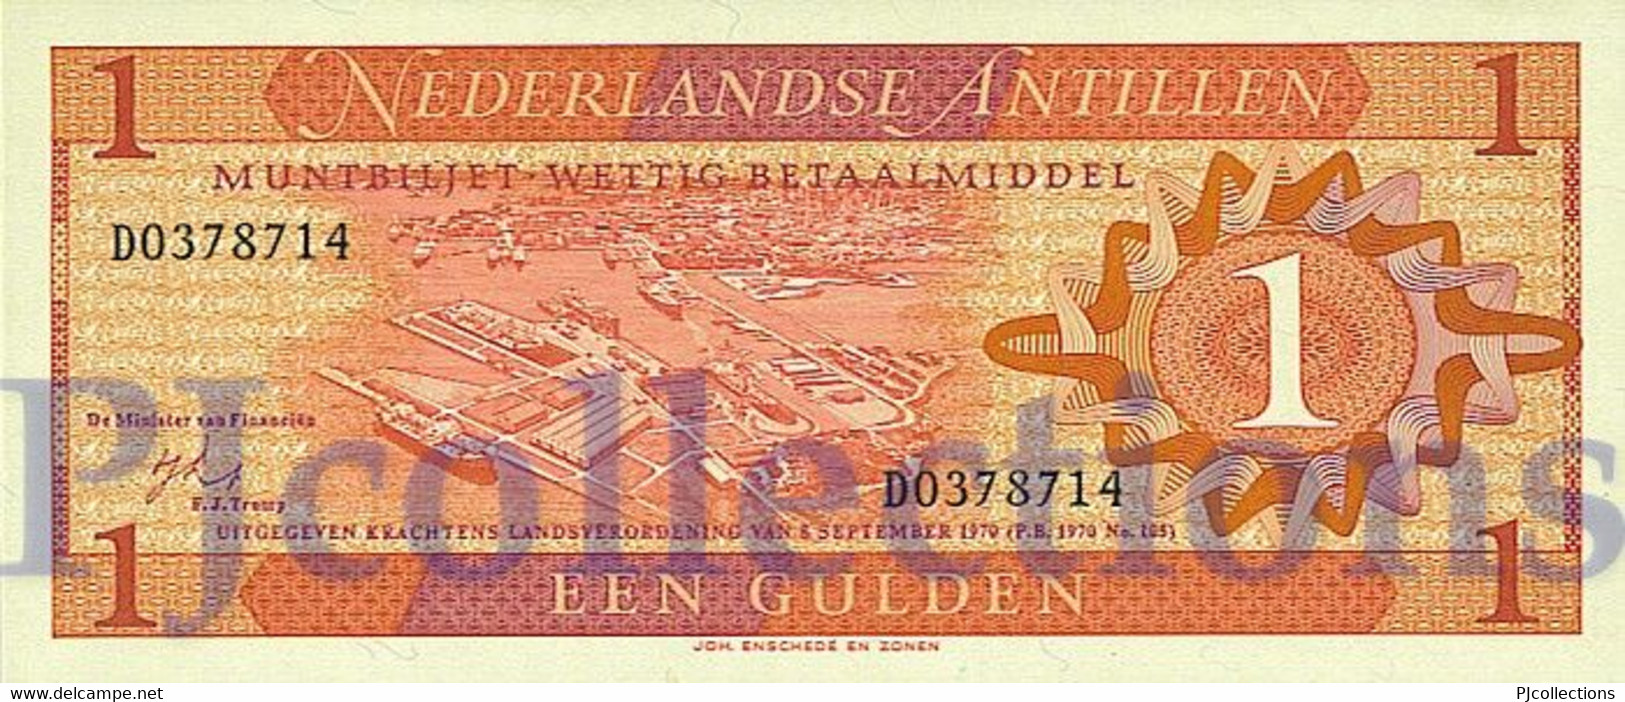 NETHERLANDS ANTILLES 1 GULDEN 1970 PICK 20a UNC - Netherlands Antilles (...-1986)